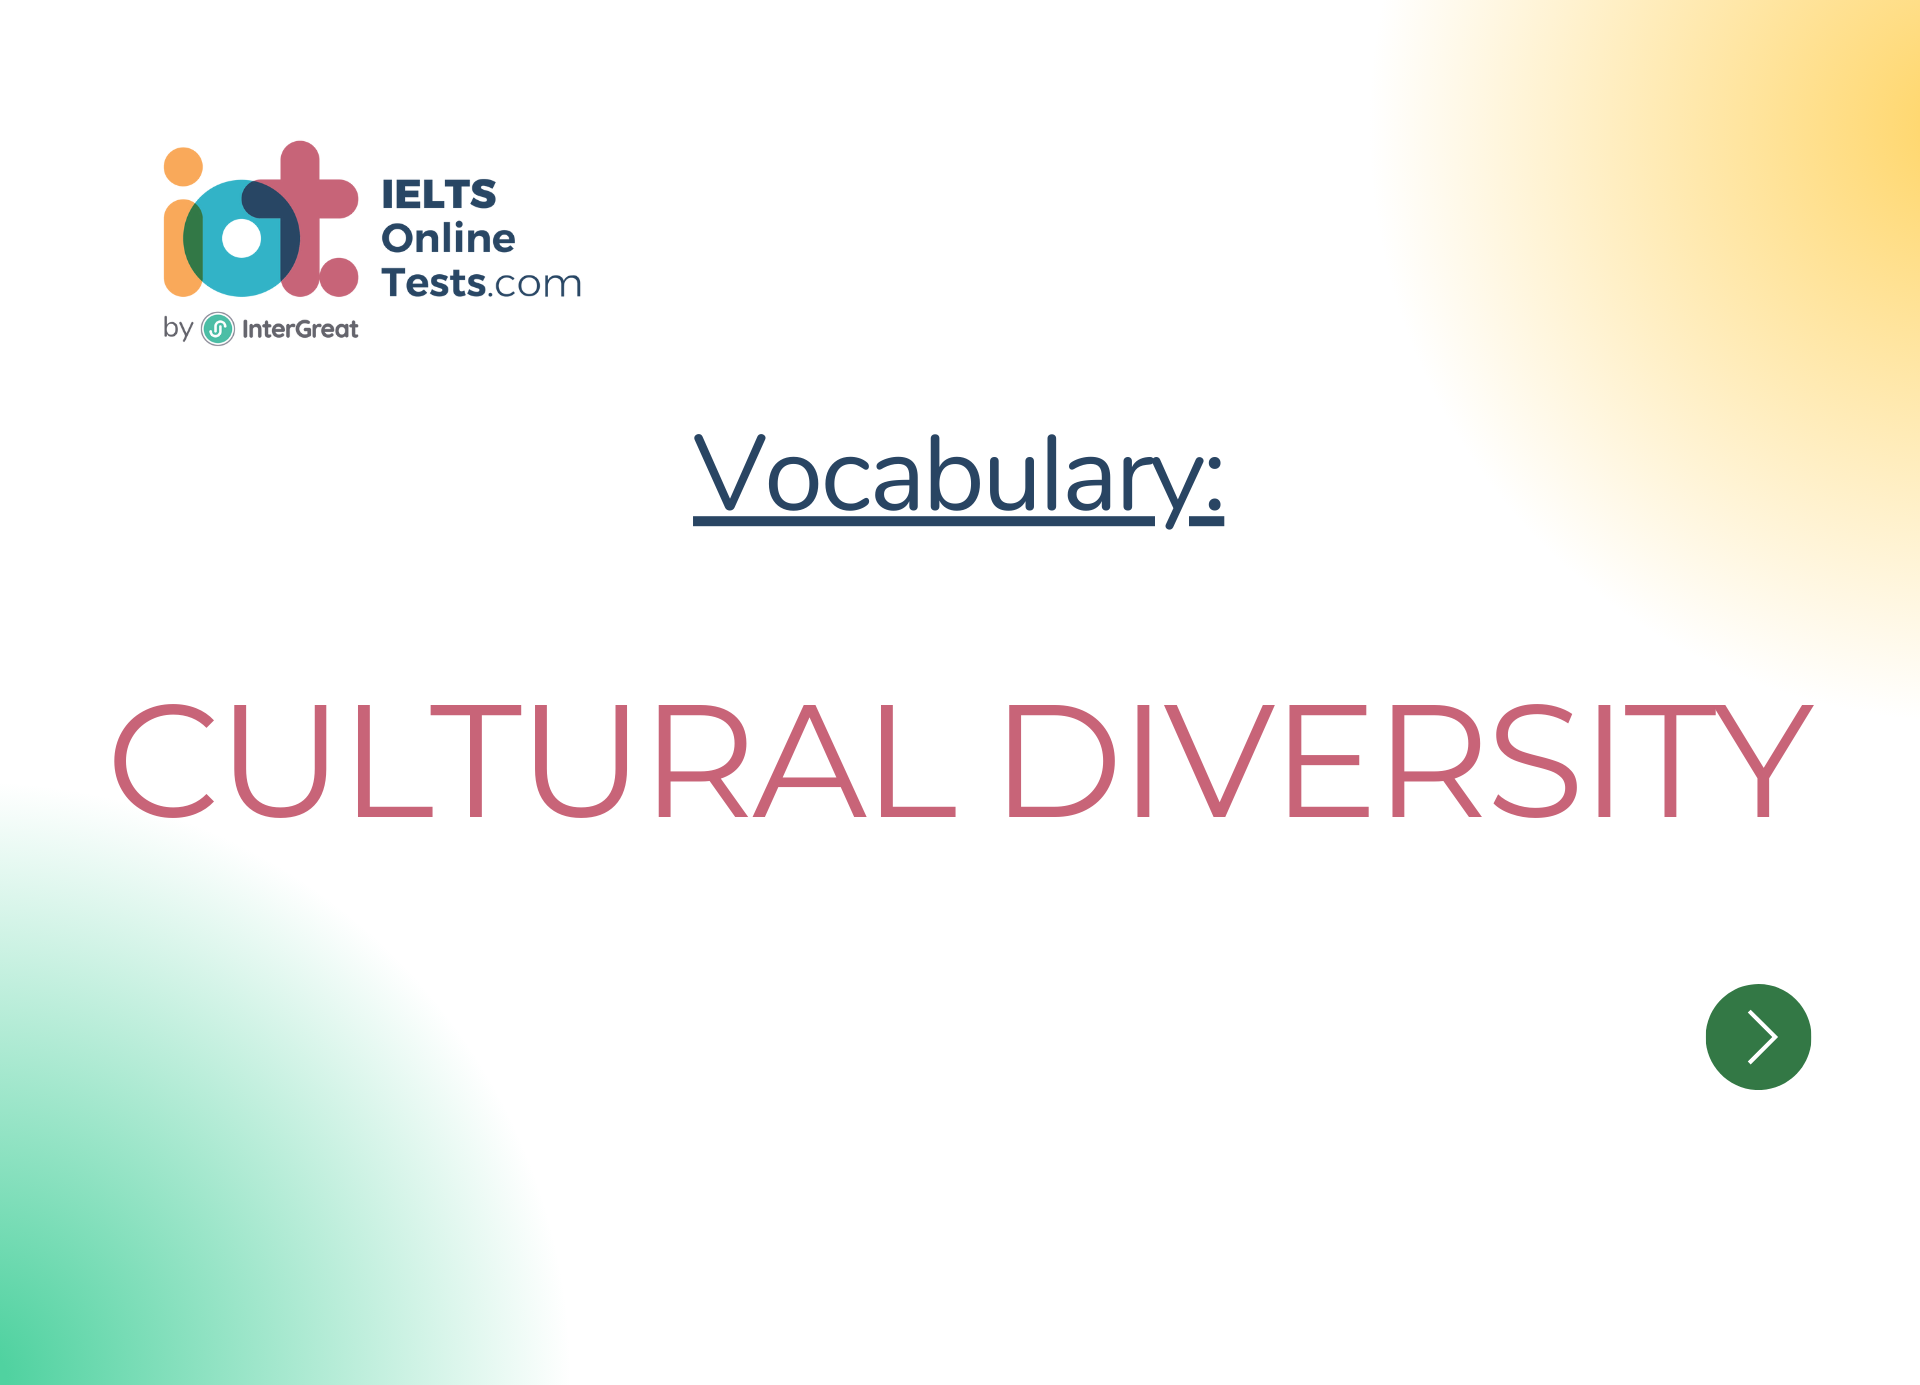 Cultural diversity | IELTS Online Tests